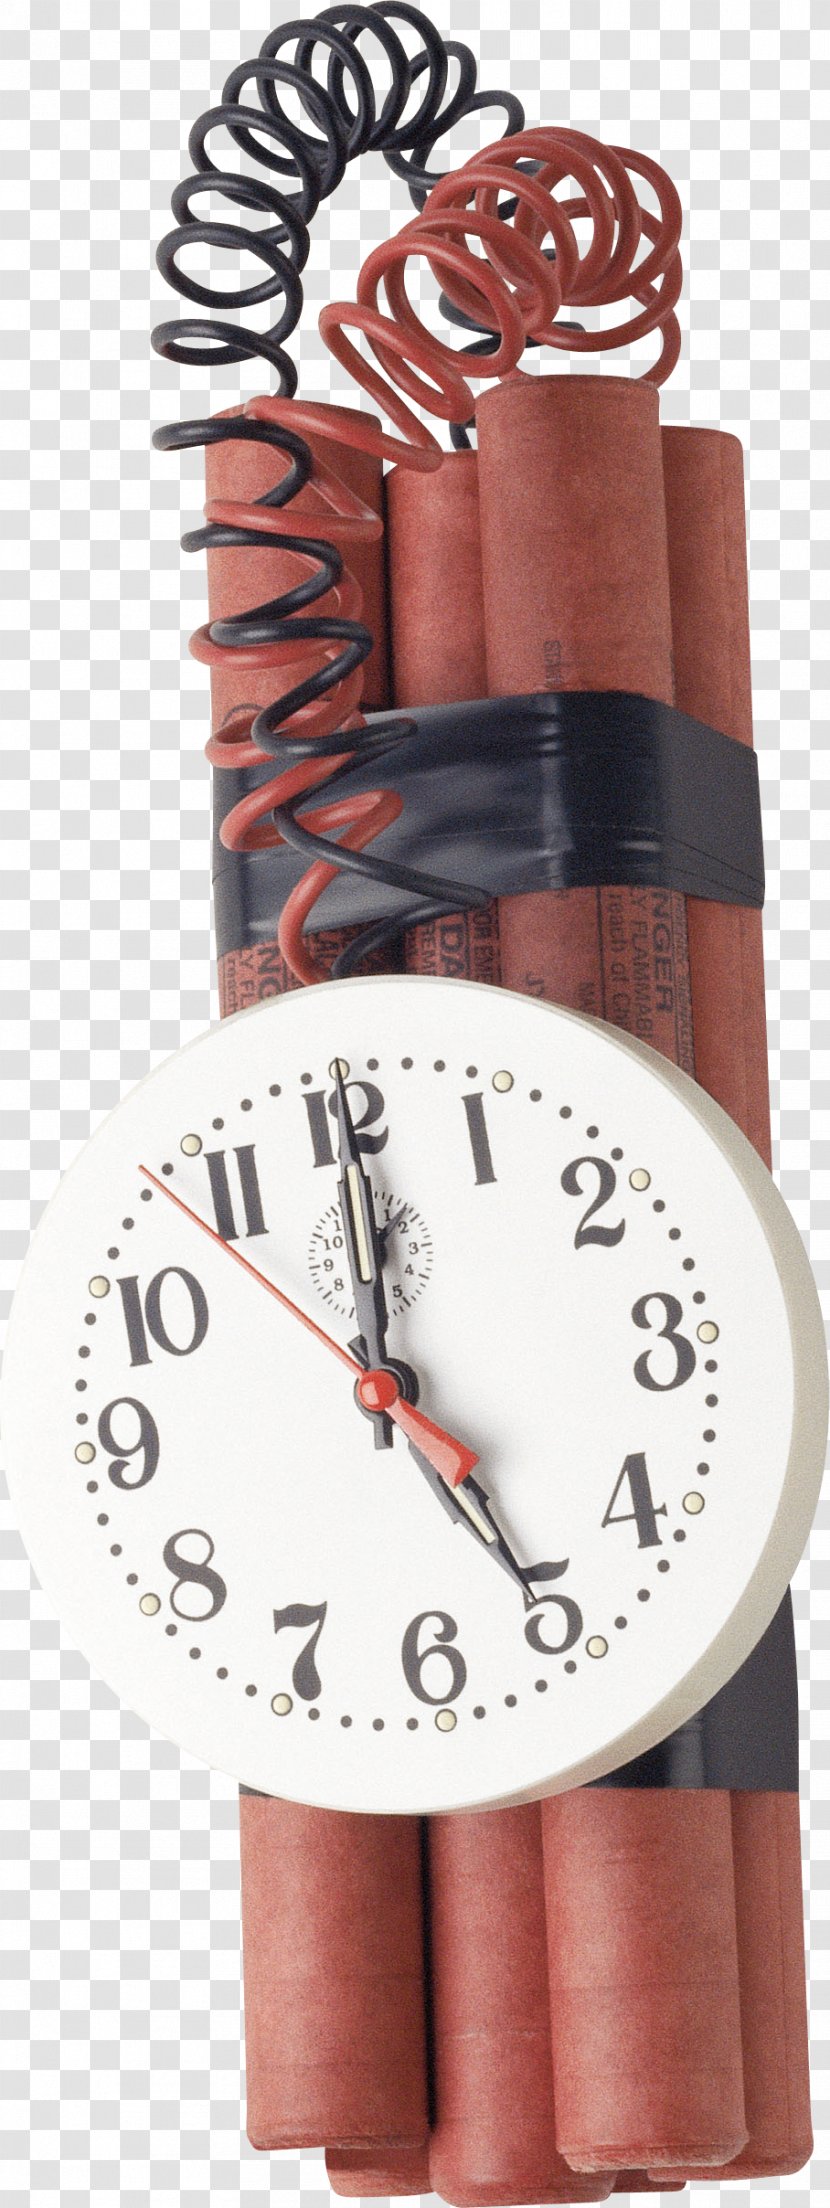 Time Bomb Clip Art - Clock - Dynamite Transparent PNG